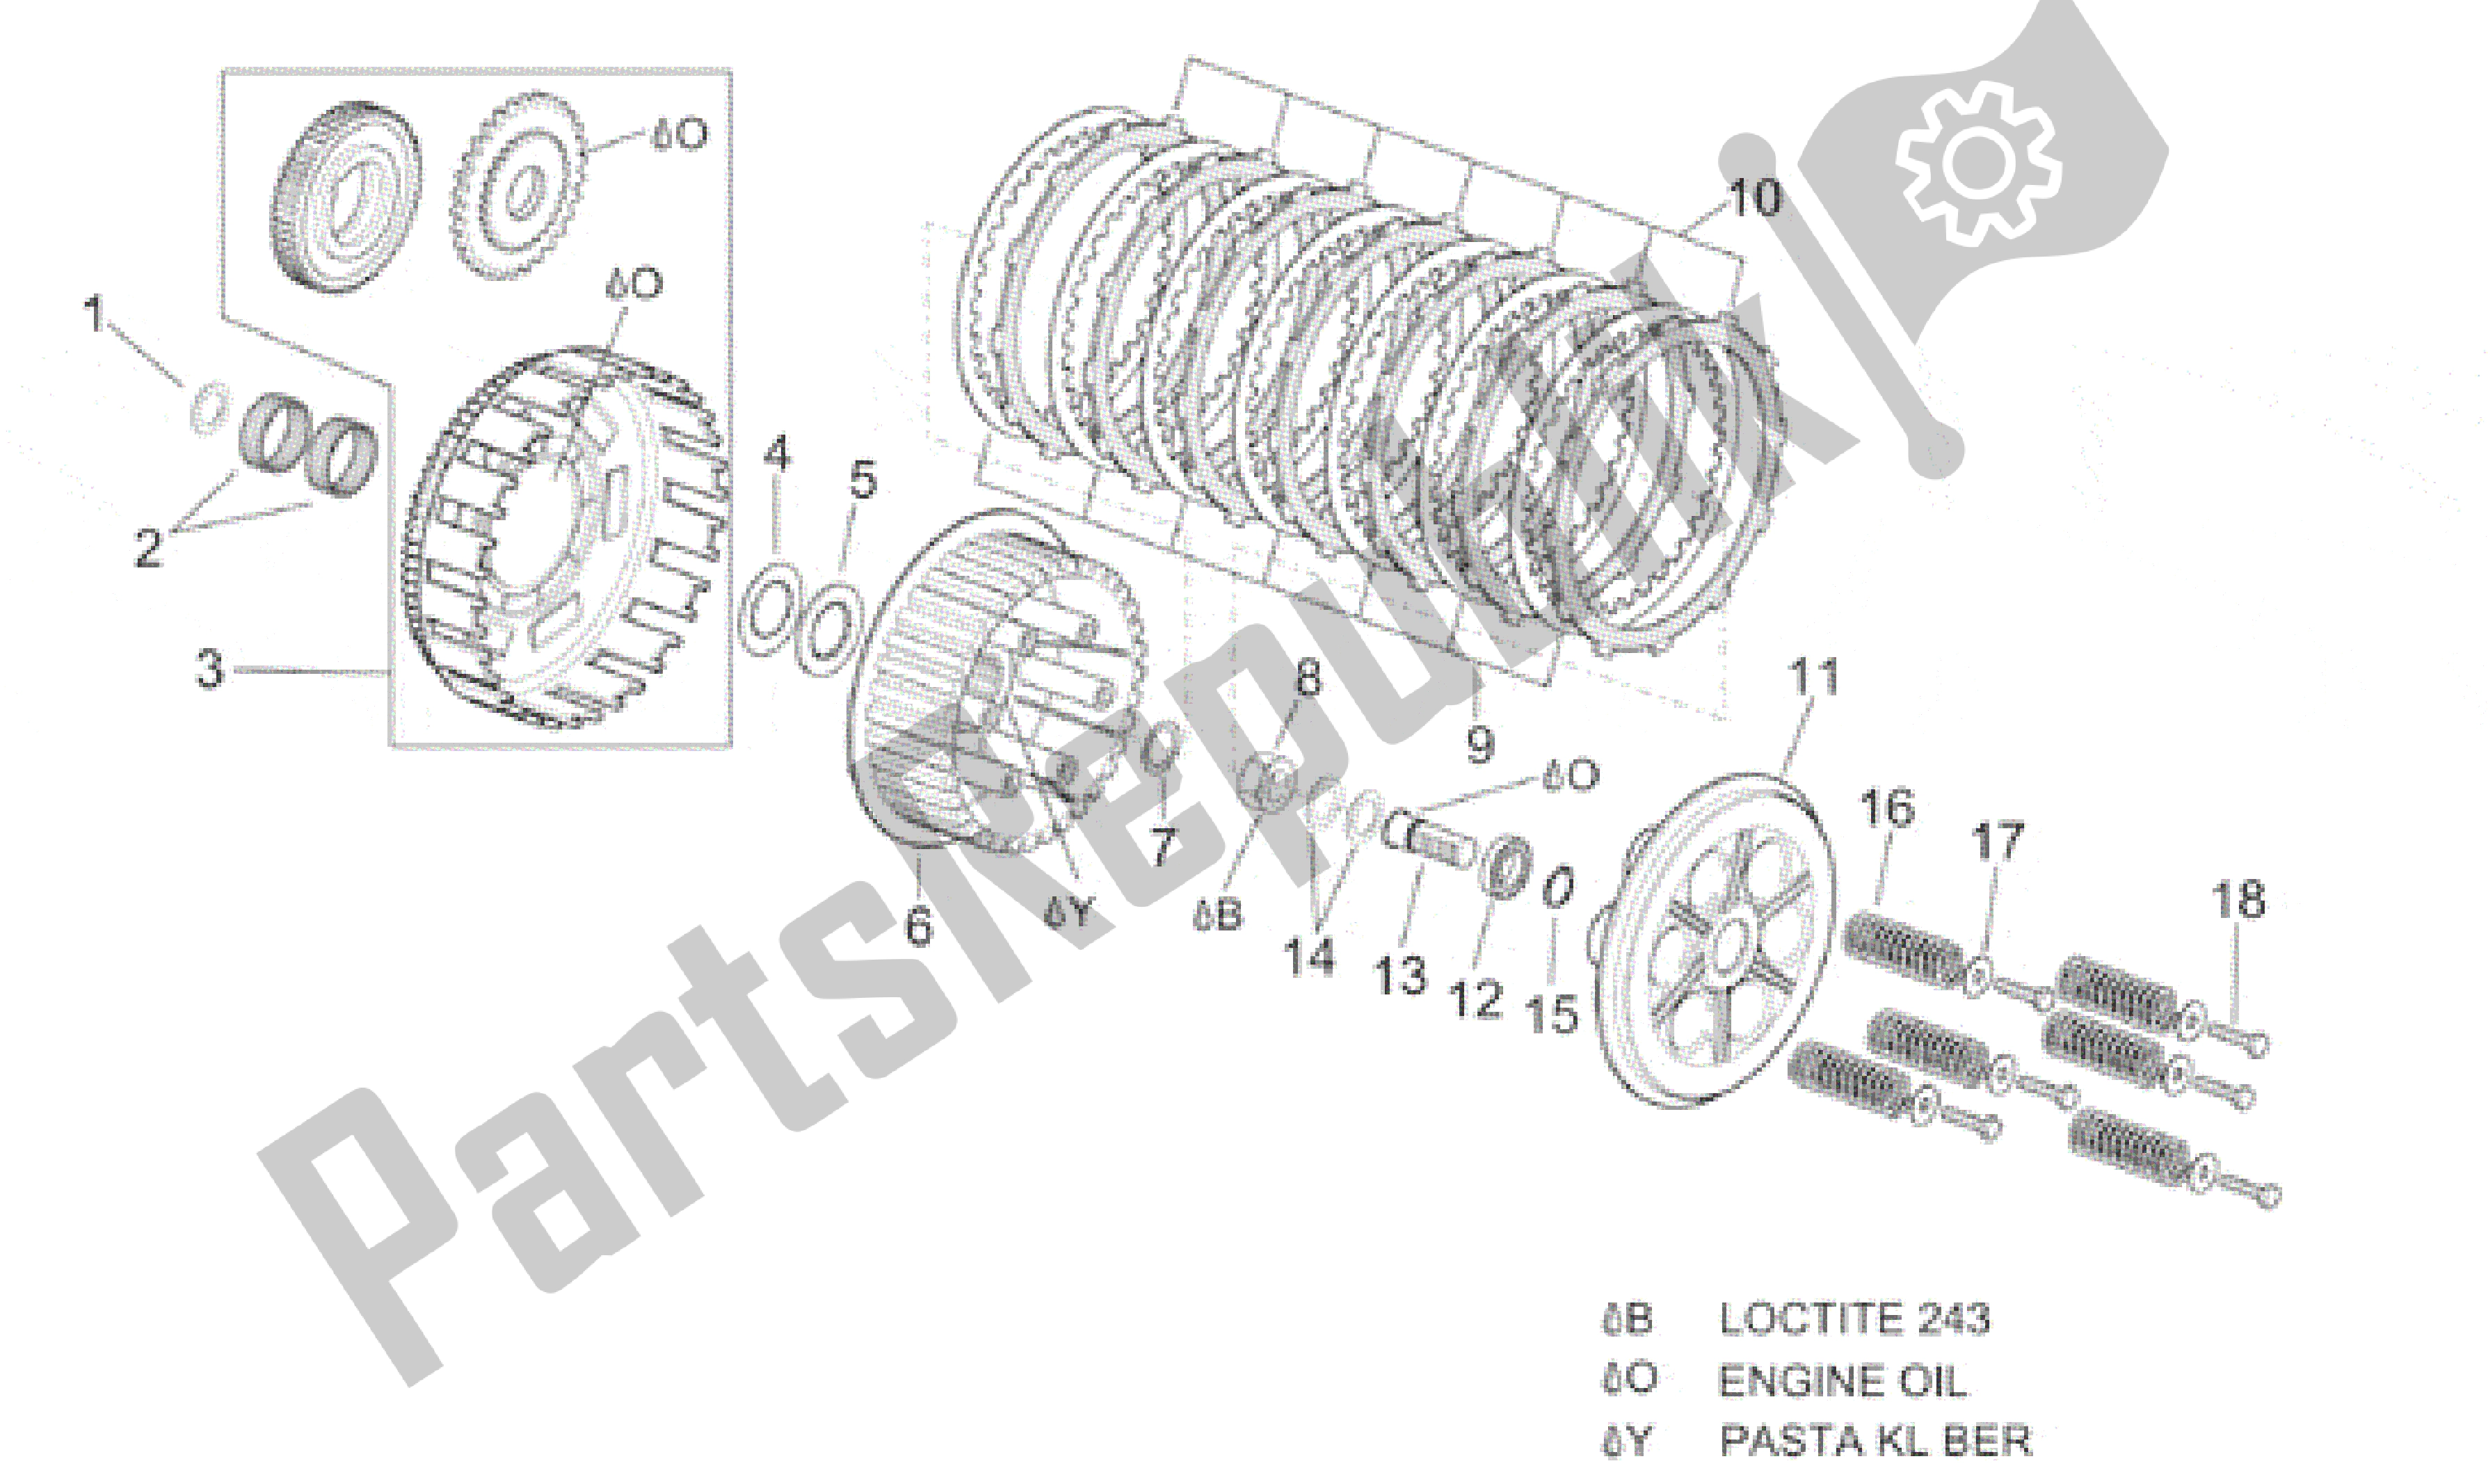 All parts for the Clutch of the Aprilia Pegaso 650 1997 - 2000